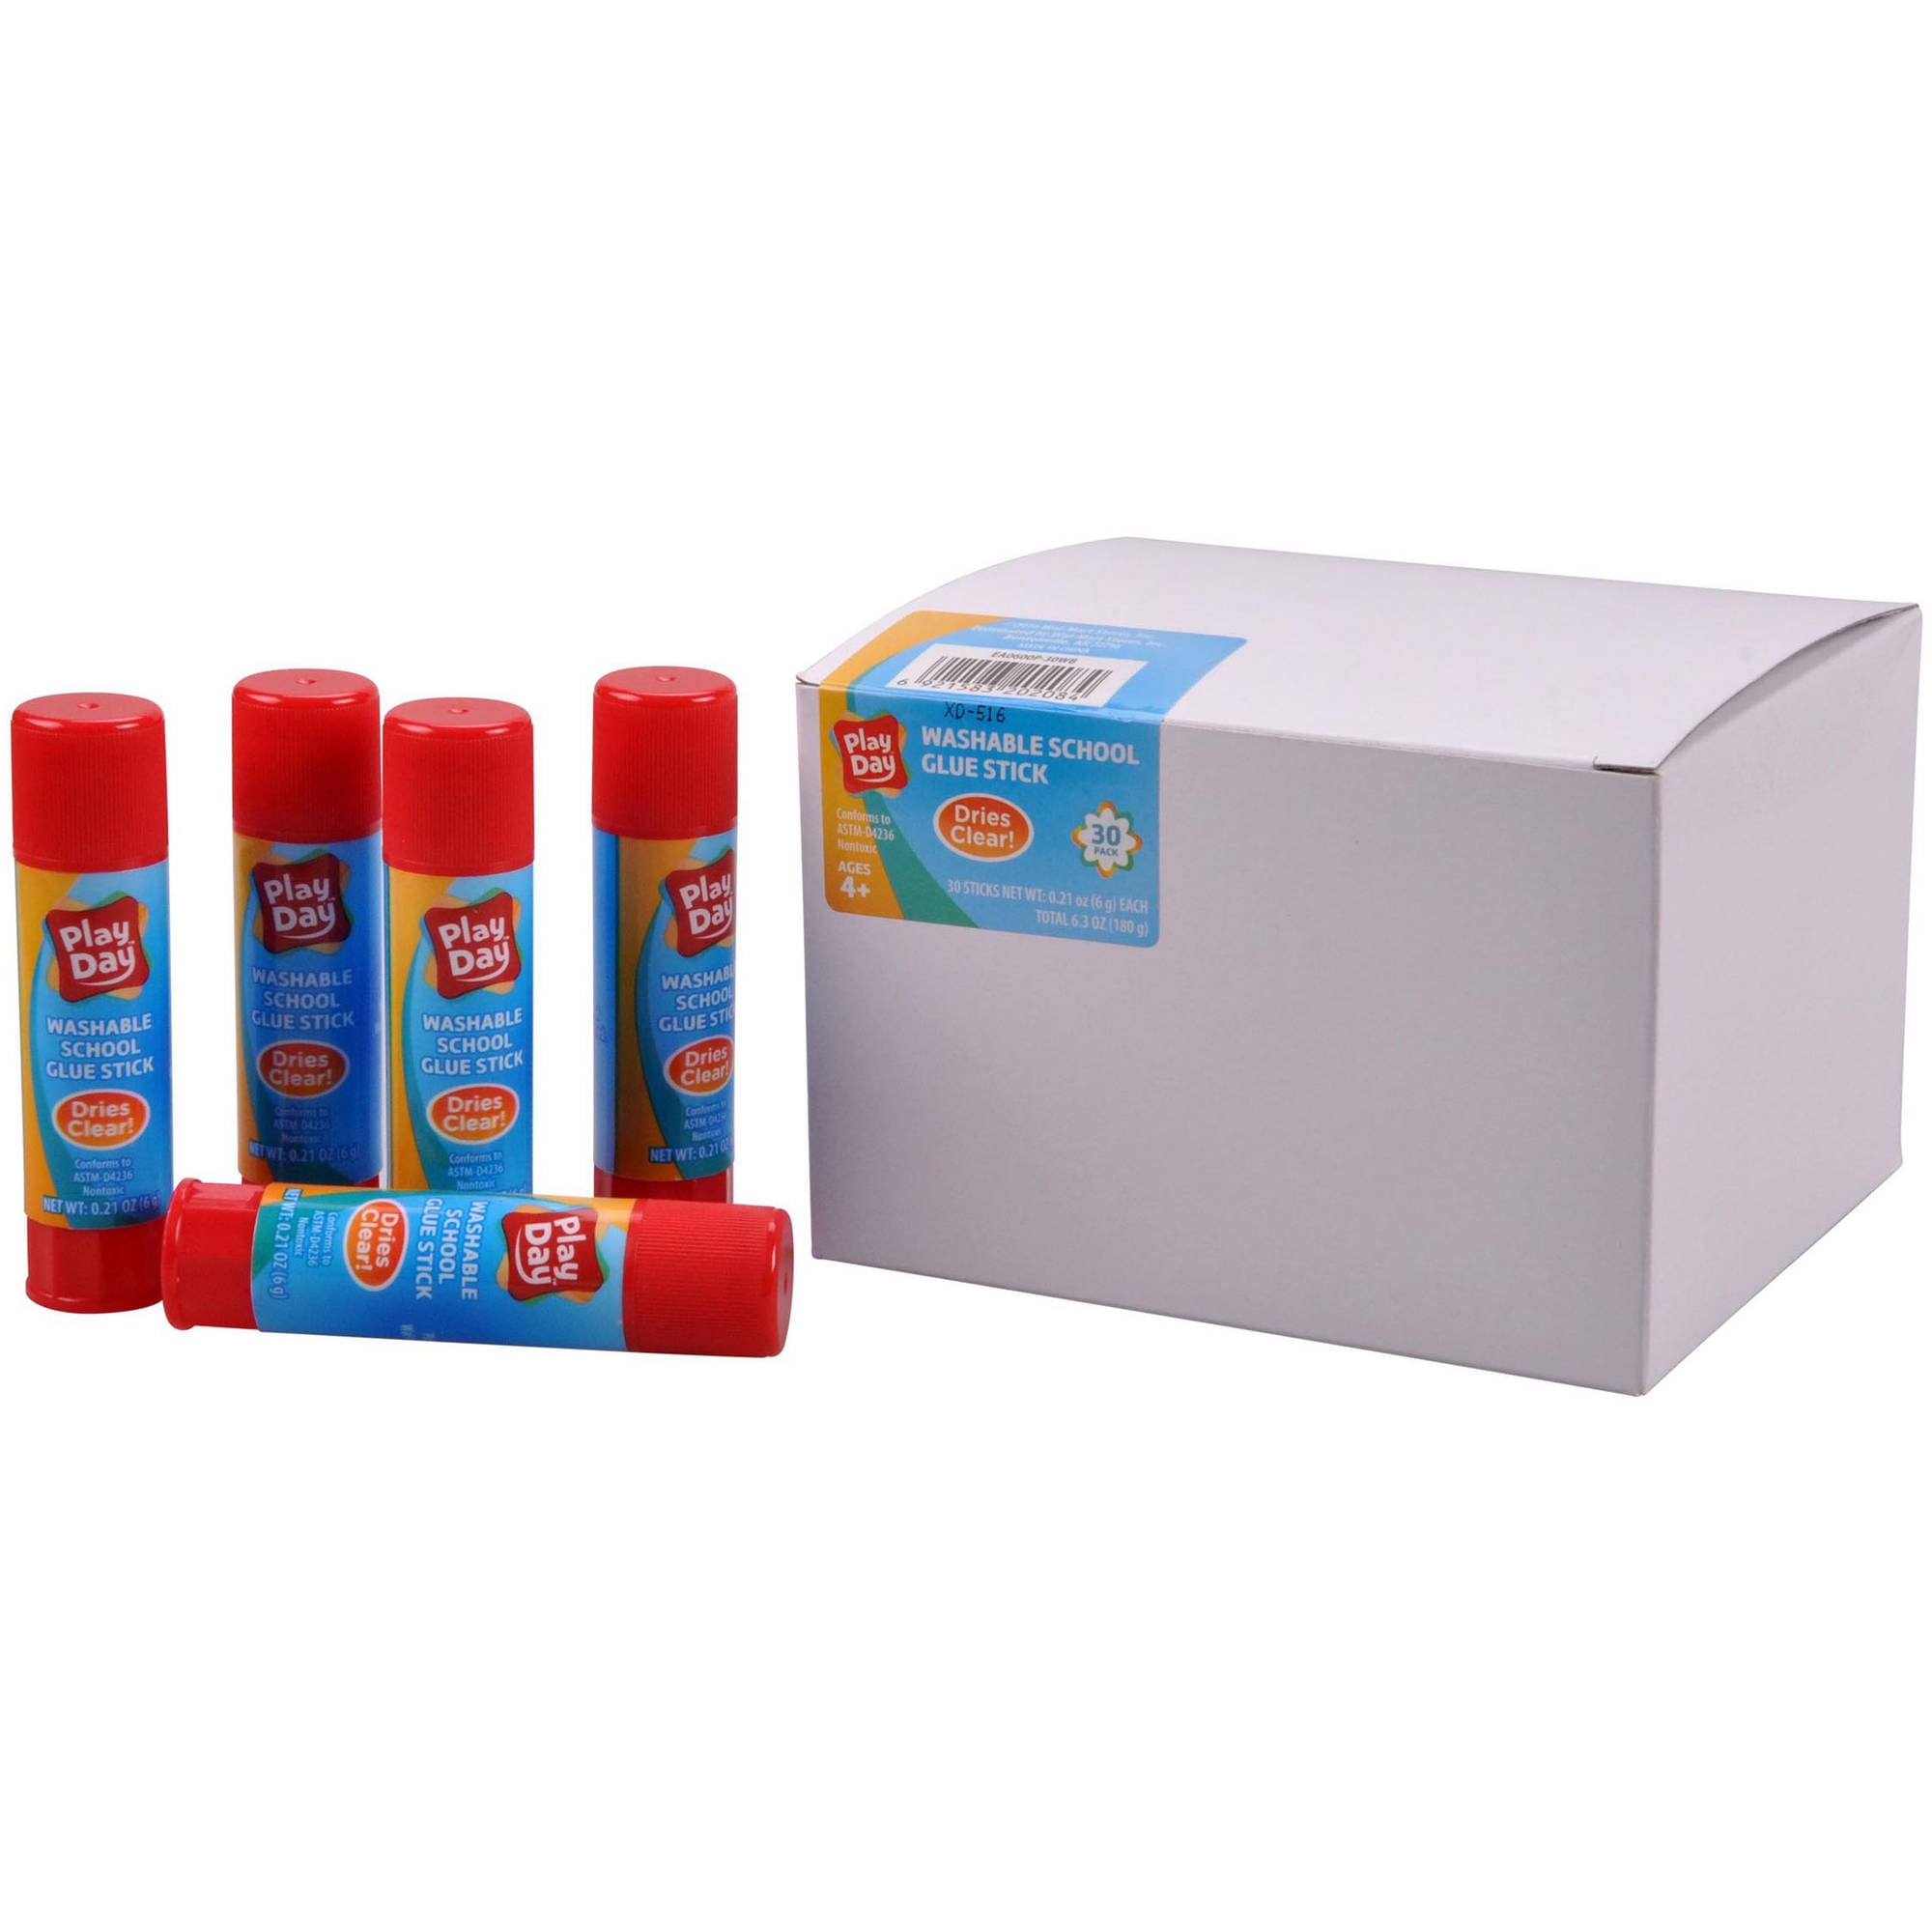 Crayola Washable Glue Stick, Clear, Bulk Glue Sticks, 12 Count 